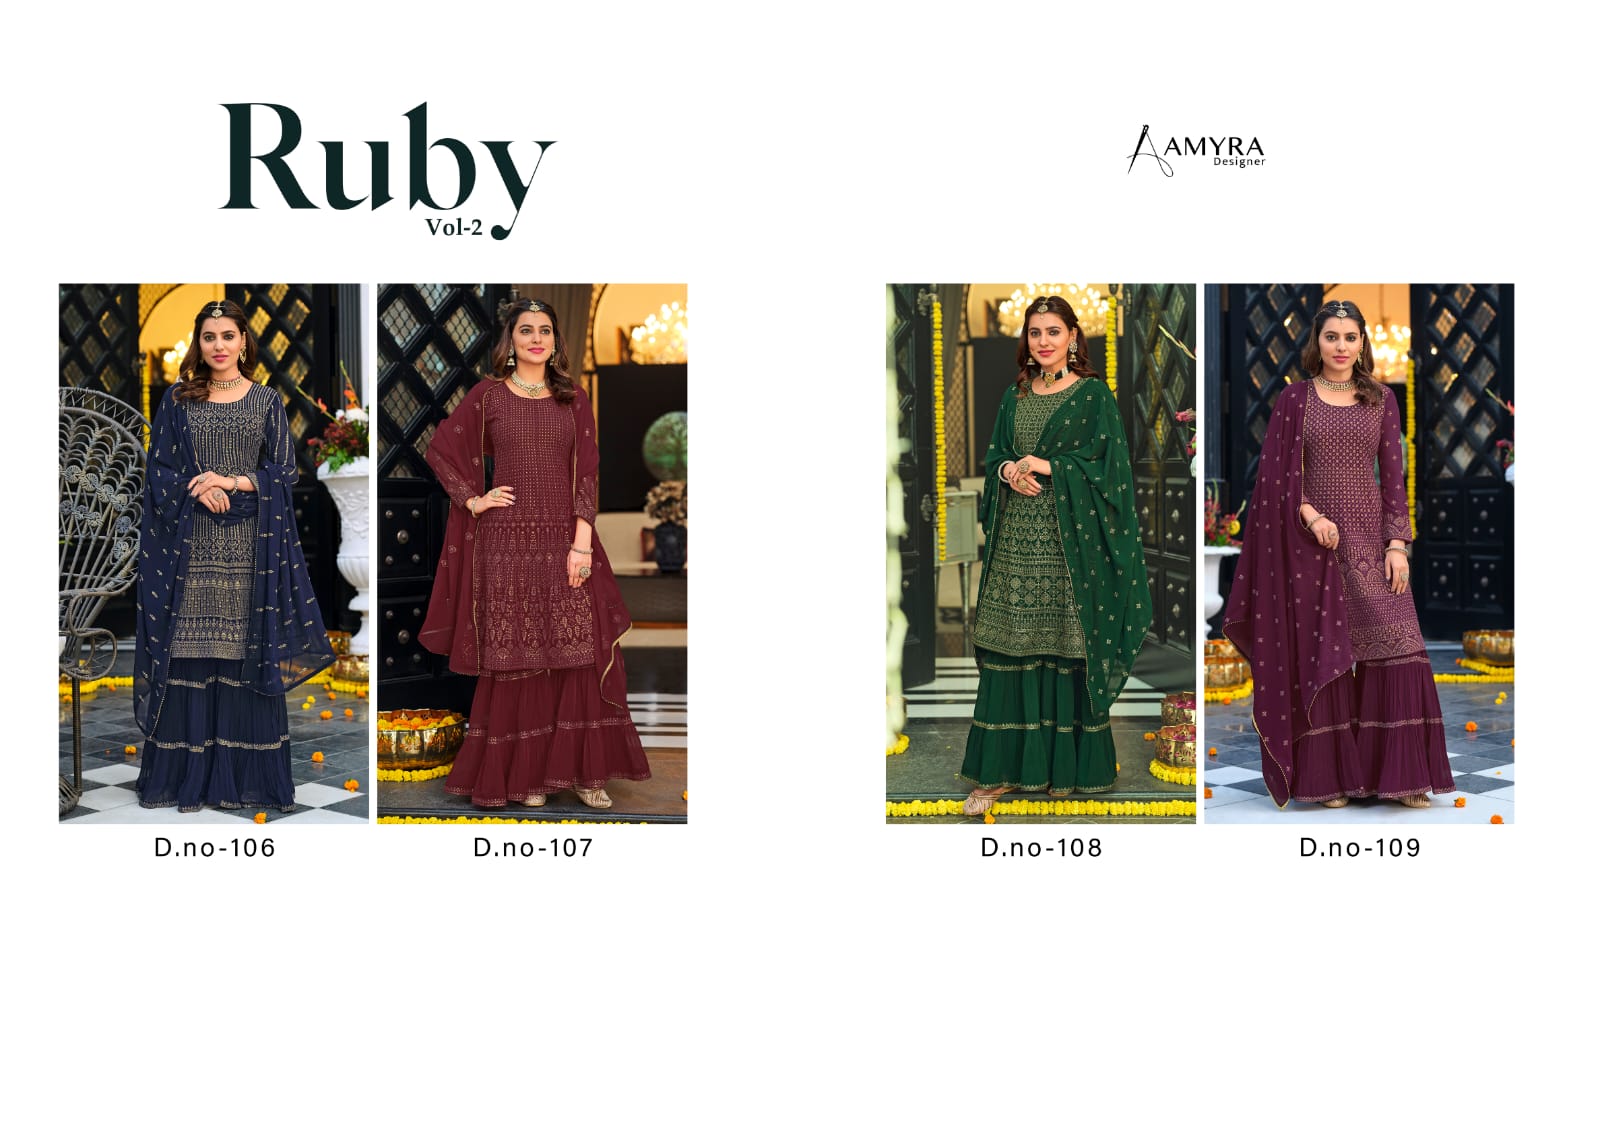 amyra designer Ruby vol 2  georgette graceful look salwar suit catalog